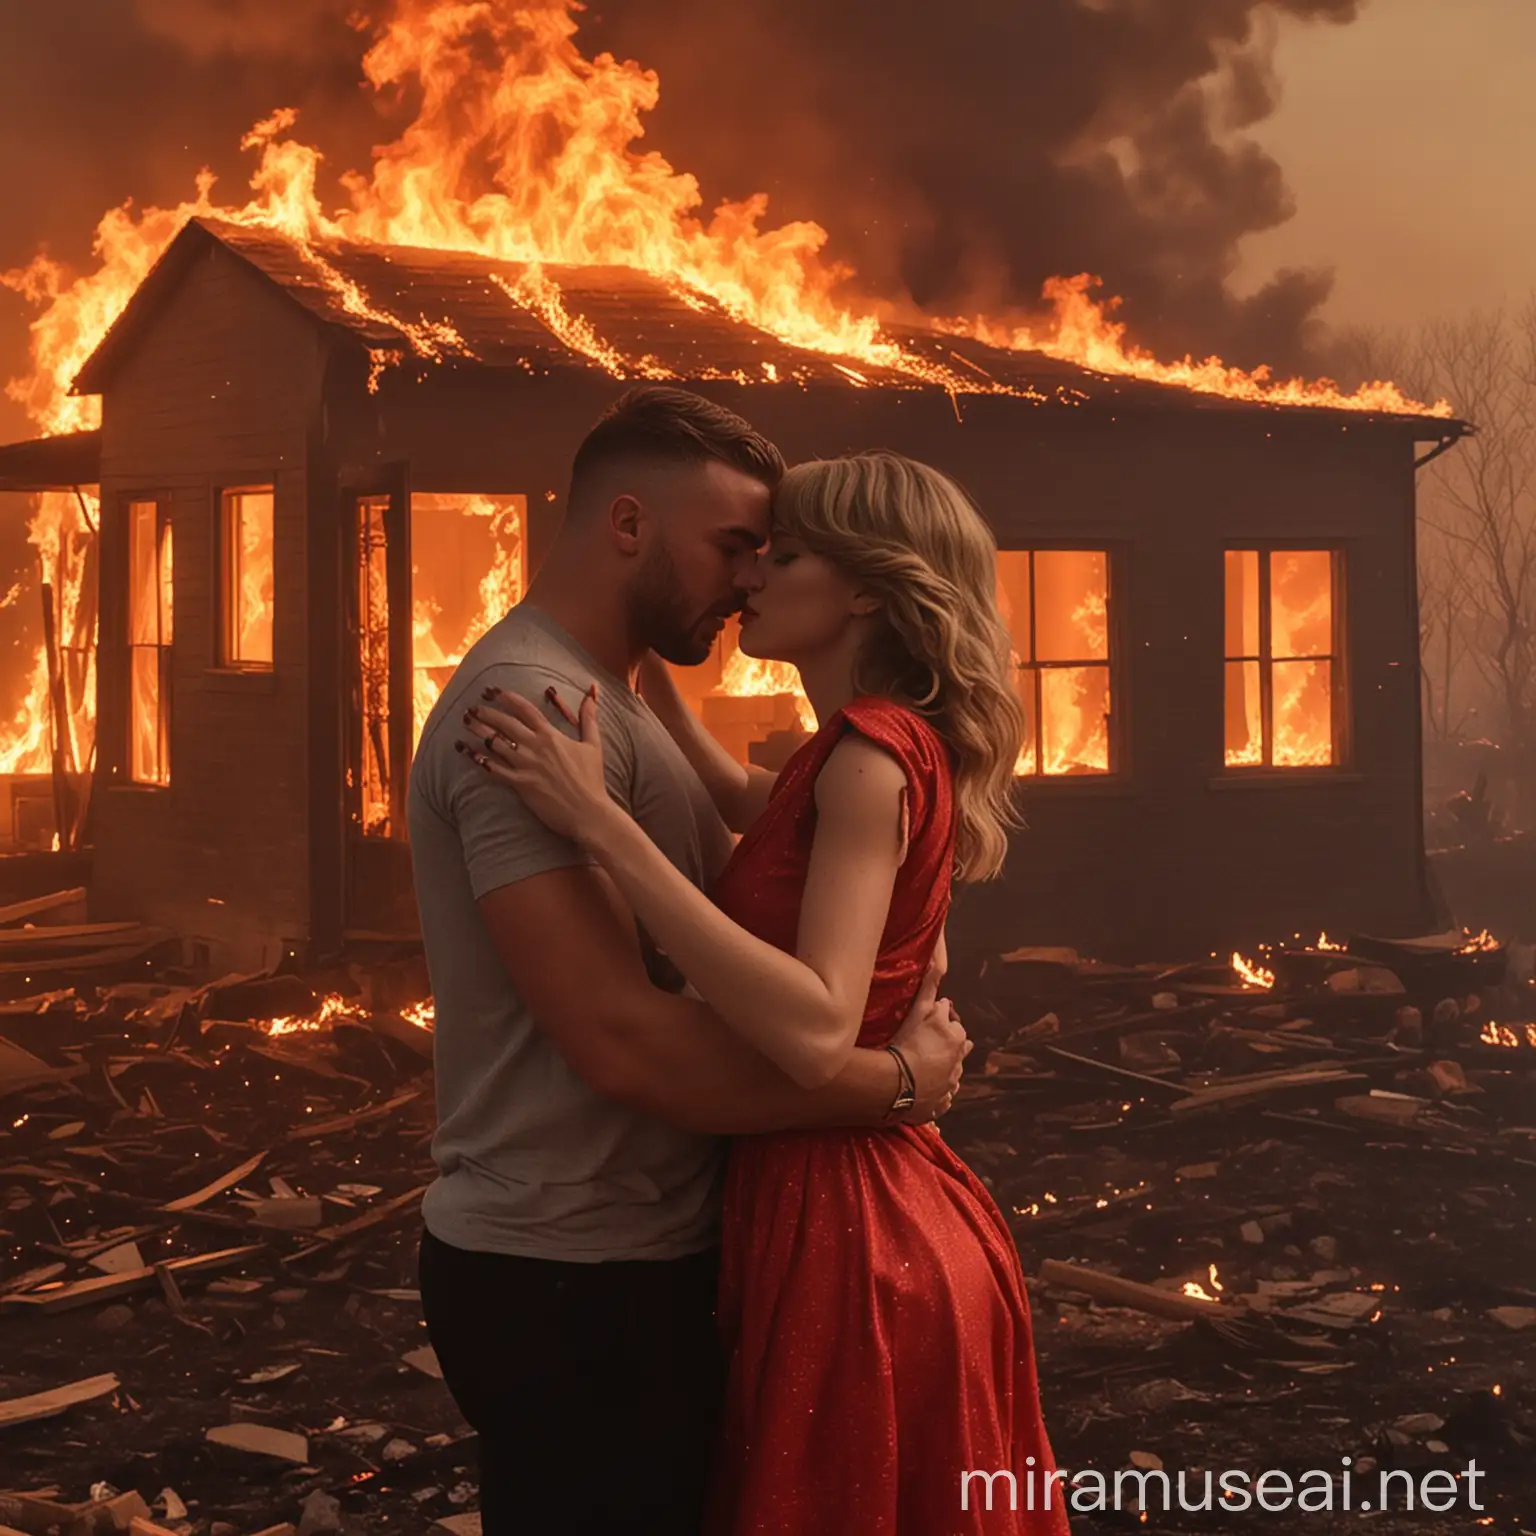 Celebrity Couple Embracing Amidst Blaze